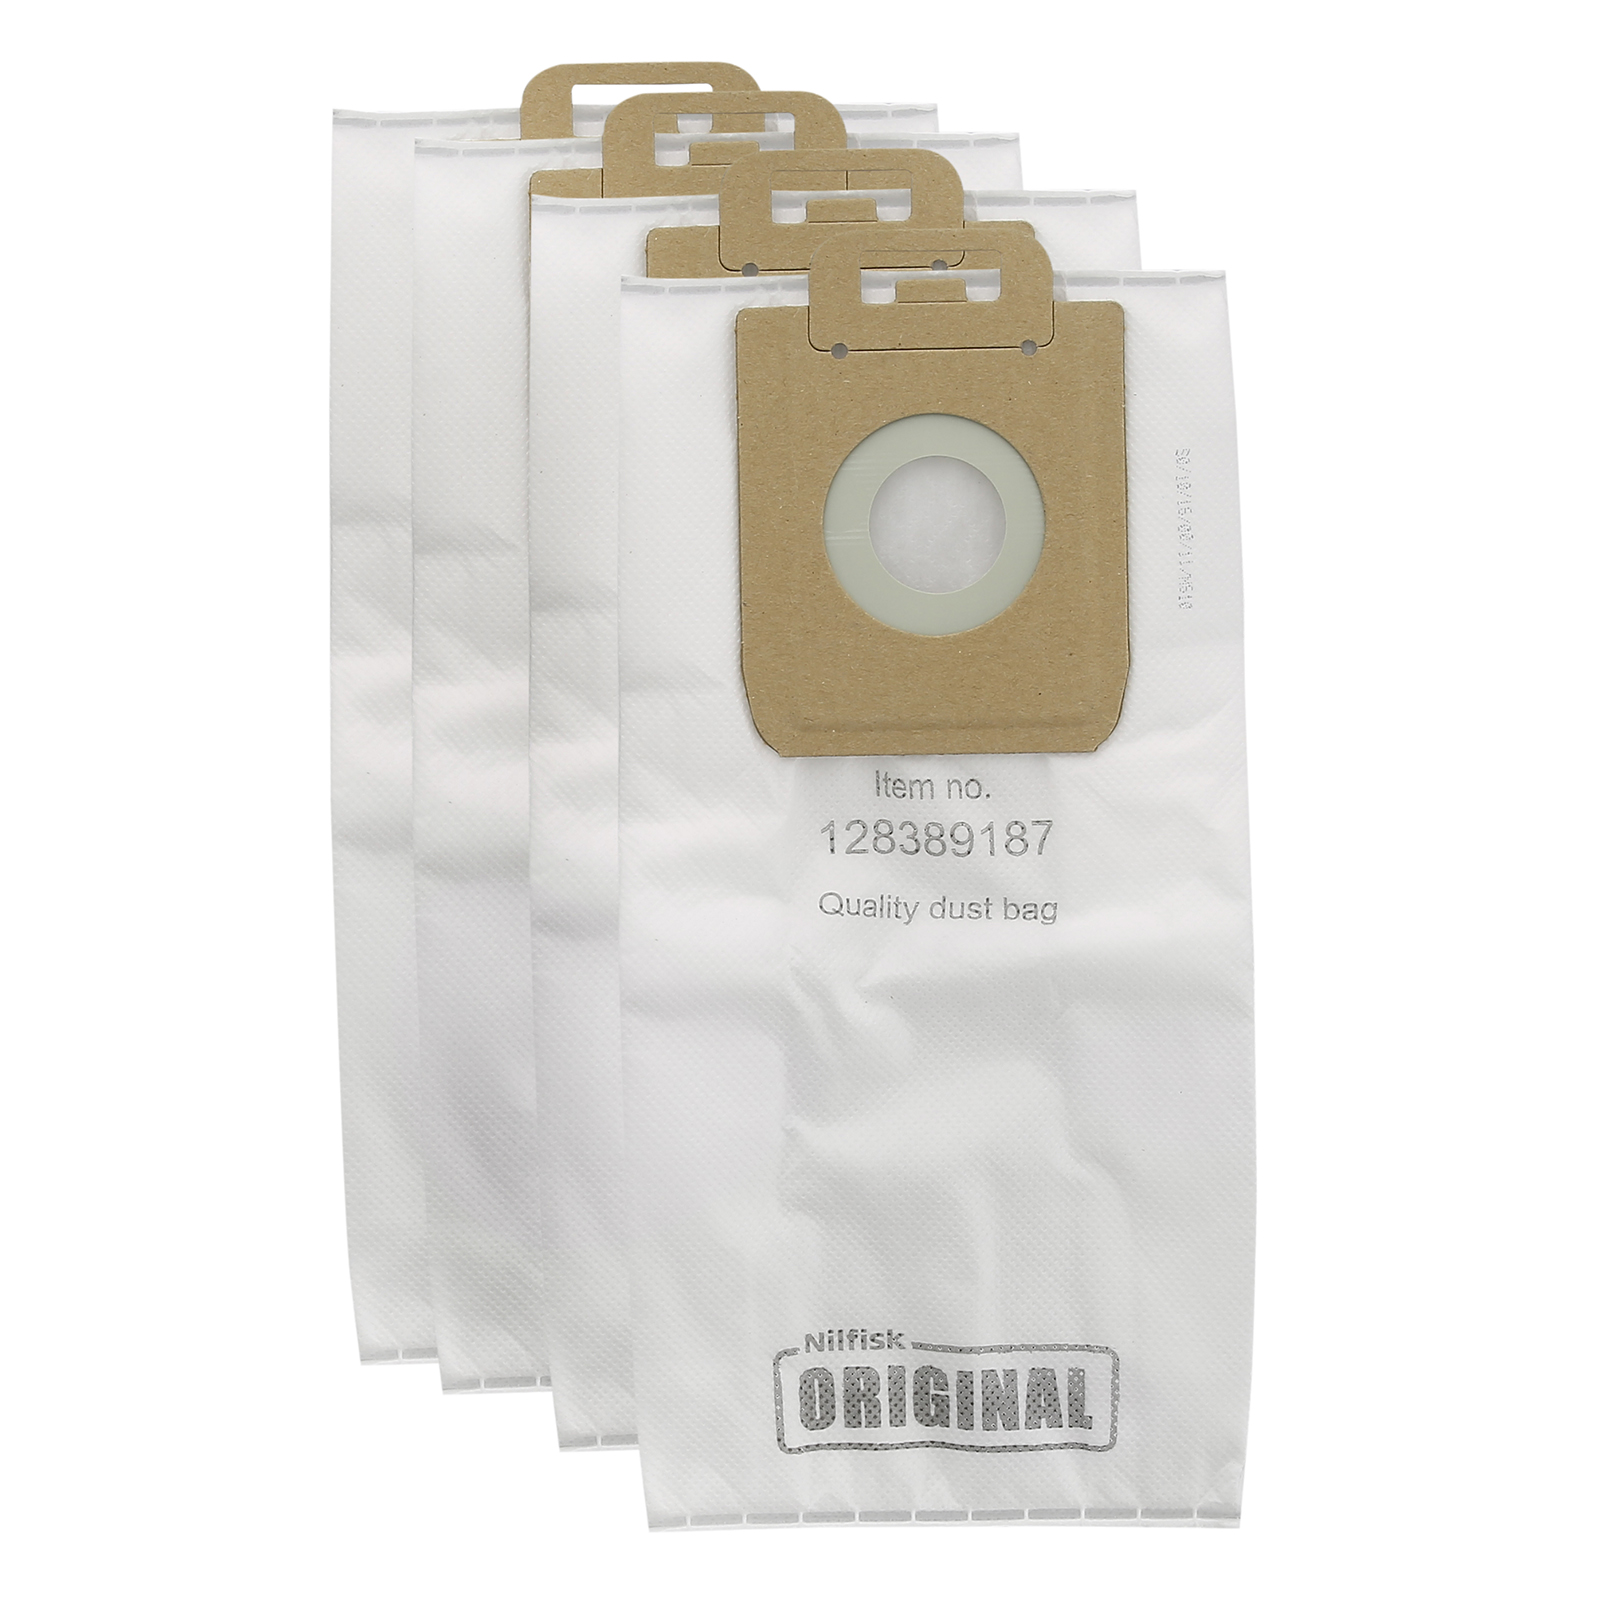 Nilfisk Vacuum Cleaner Paper Bag (Pack of 4 Paper Bags + filter) 128389187